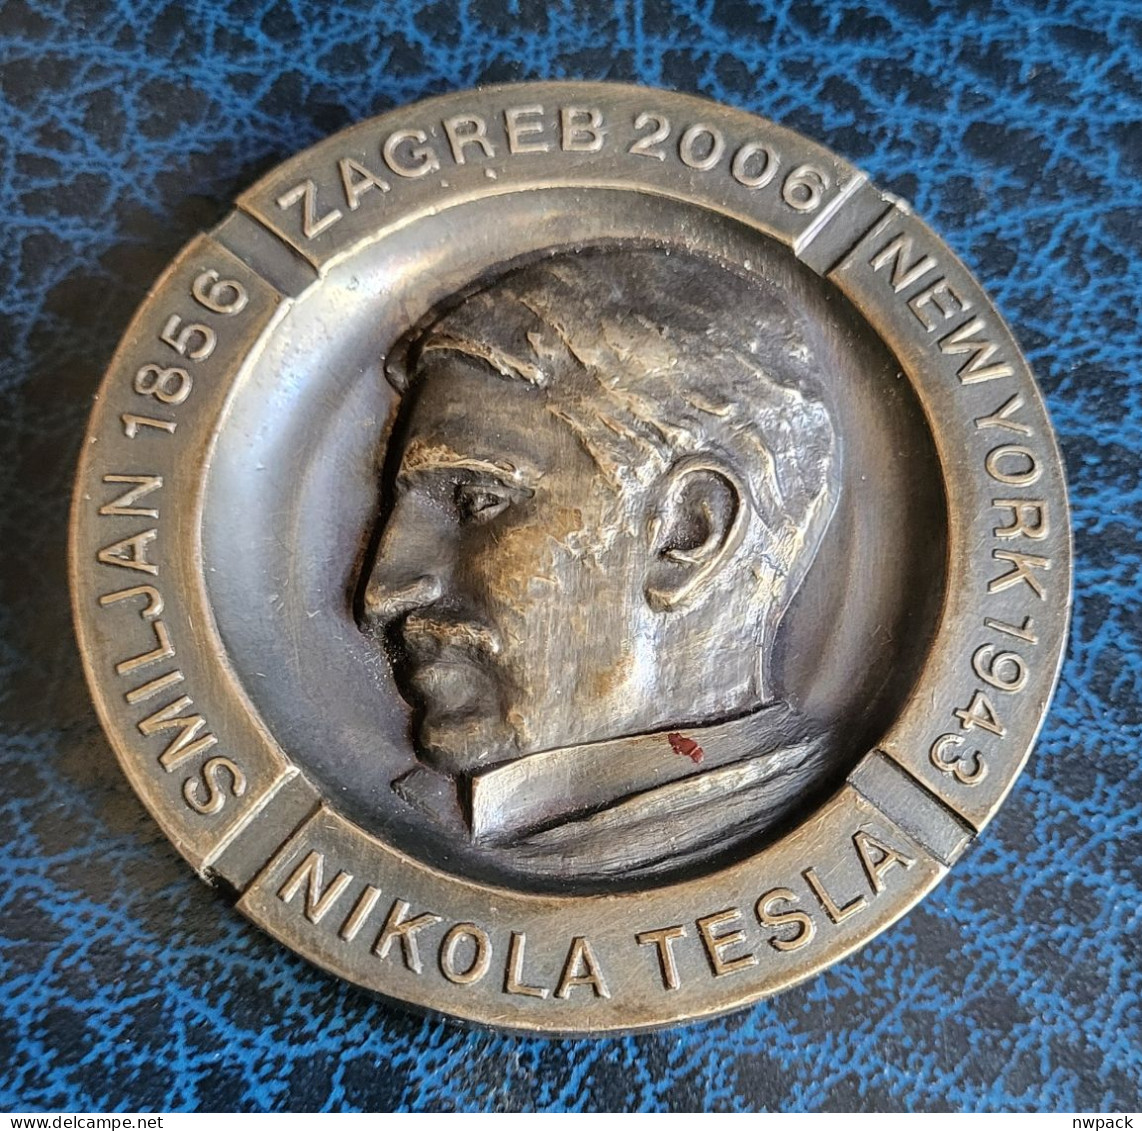 NIKOLA TESLA - CROATIA - AWARD - Medal / Plaque In Casse (BOX) - Autres Appareils